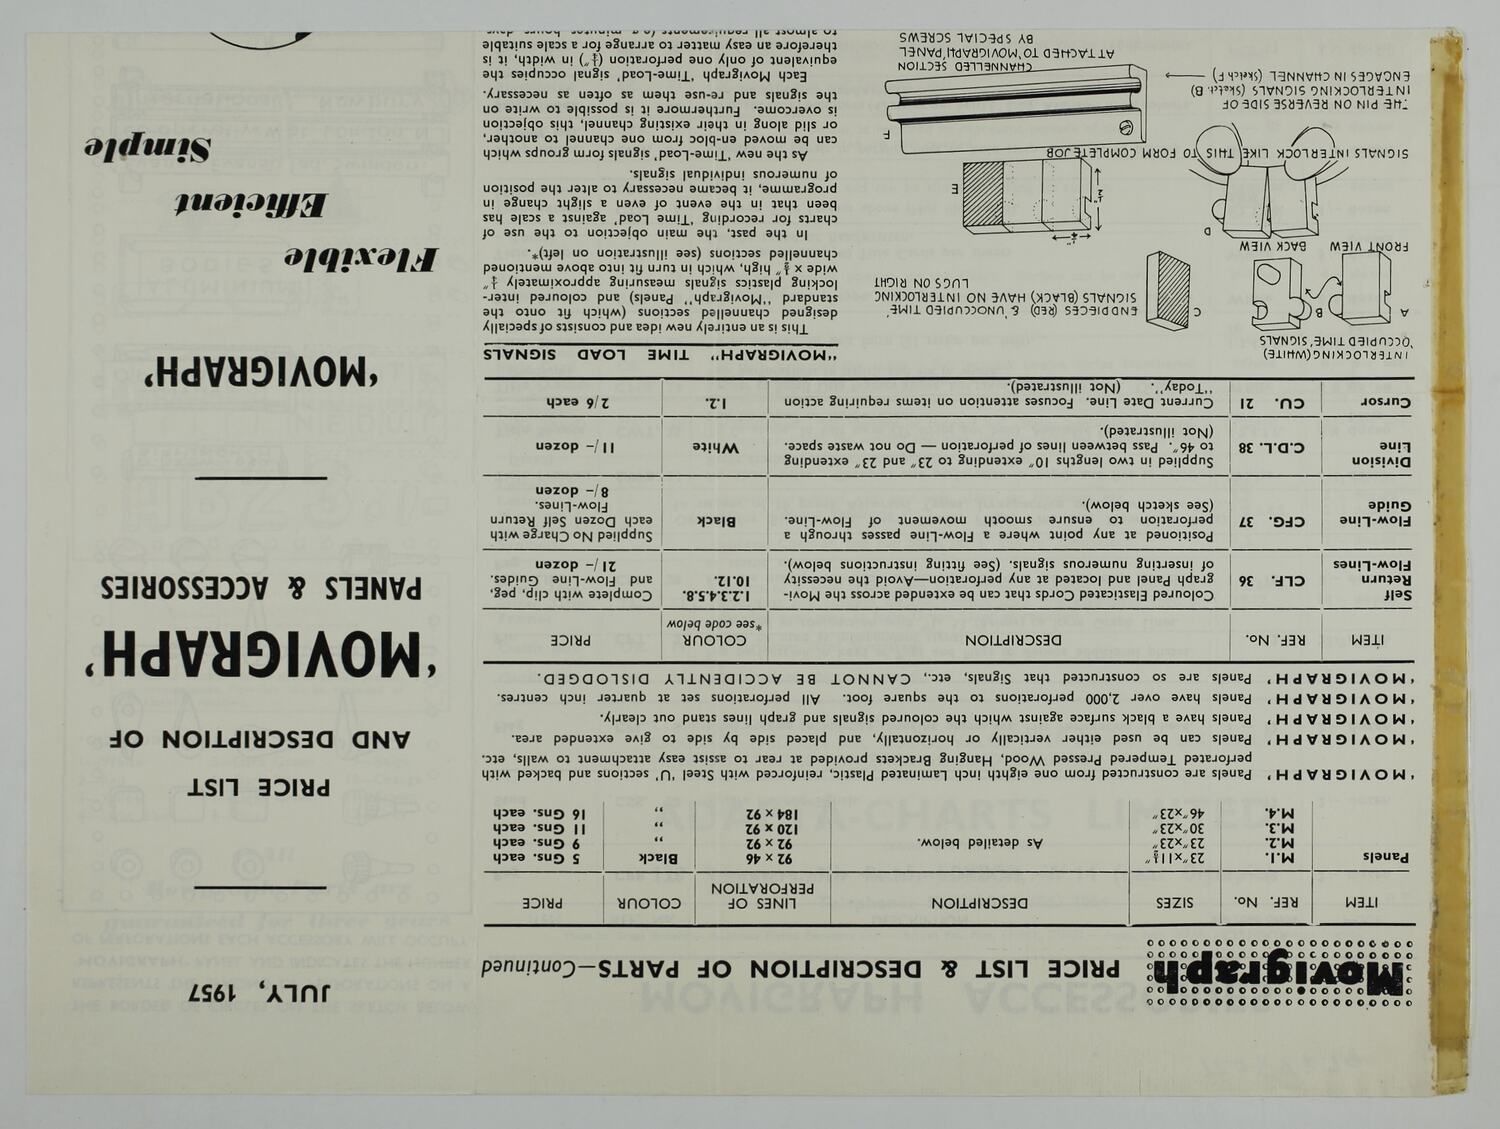 Price List AdaptaCharts Ltd, Display Signage, 1957